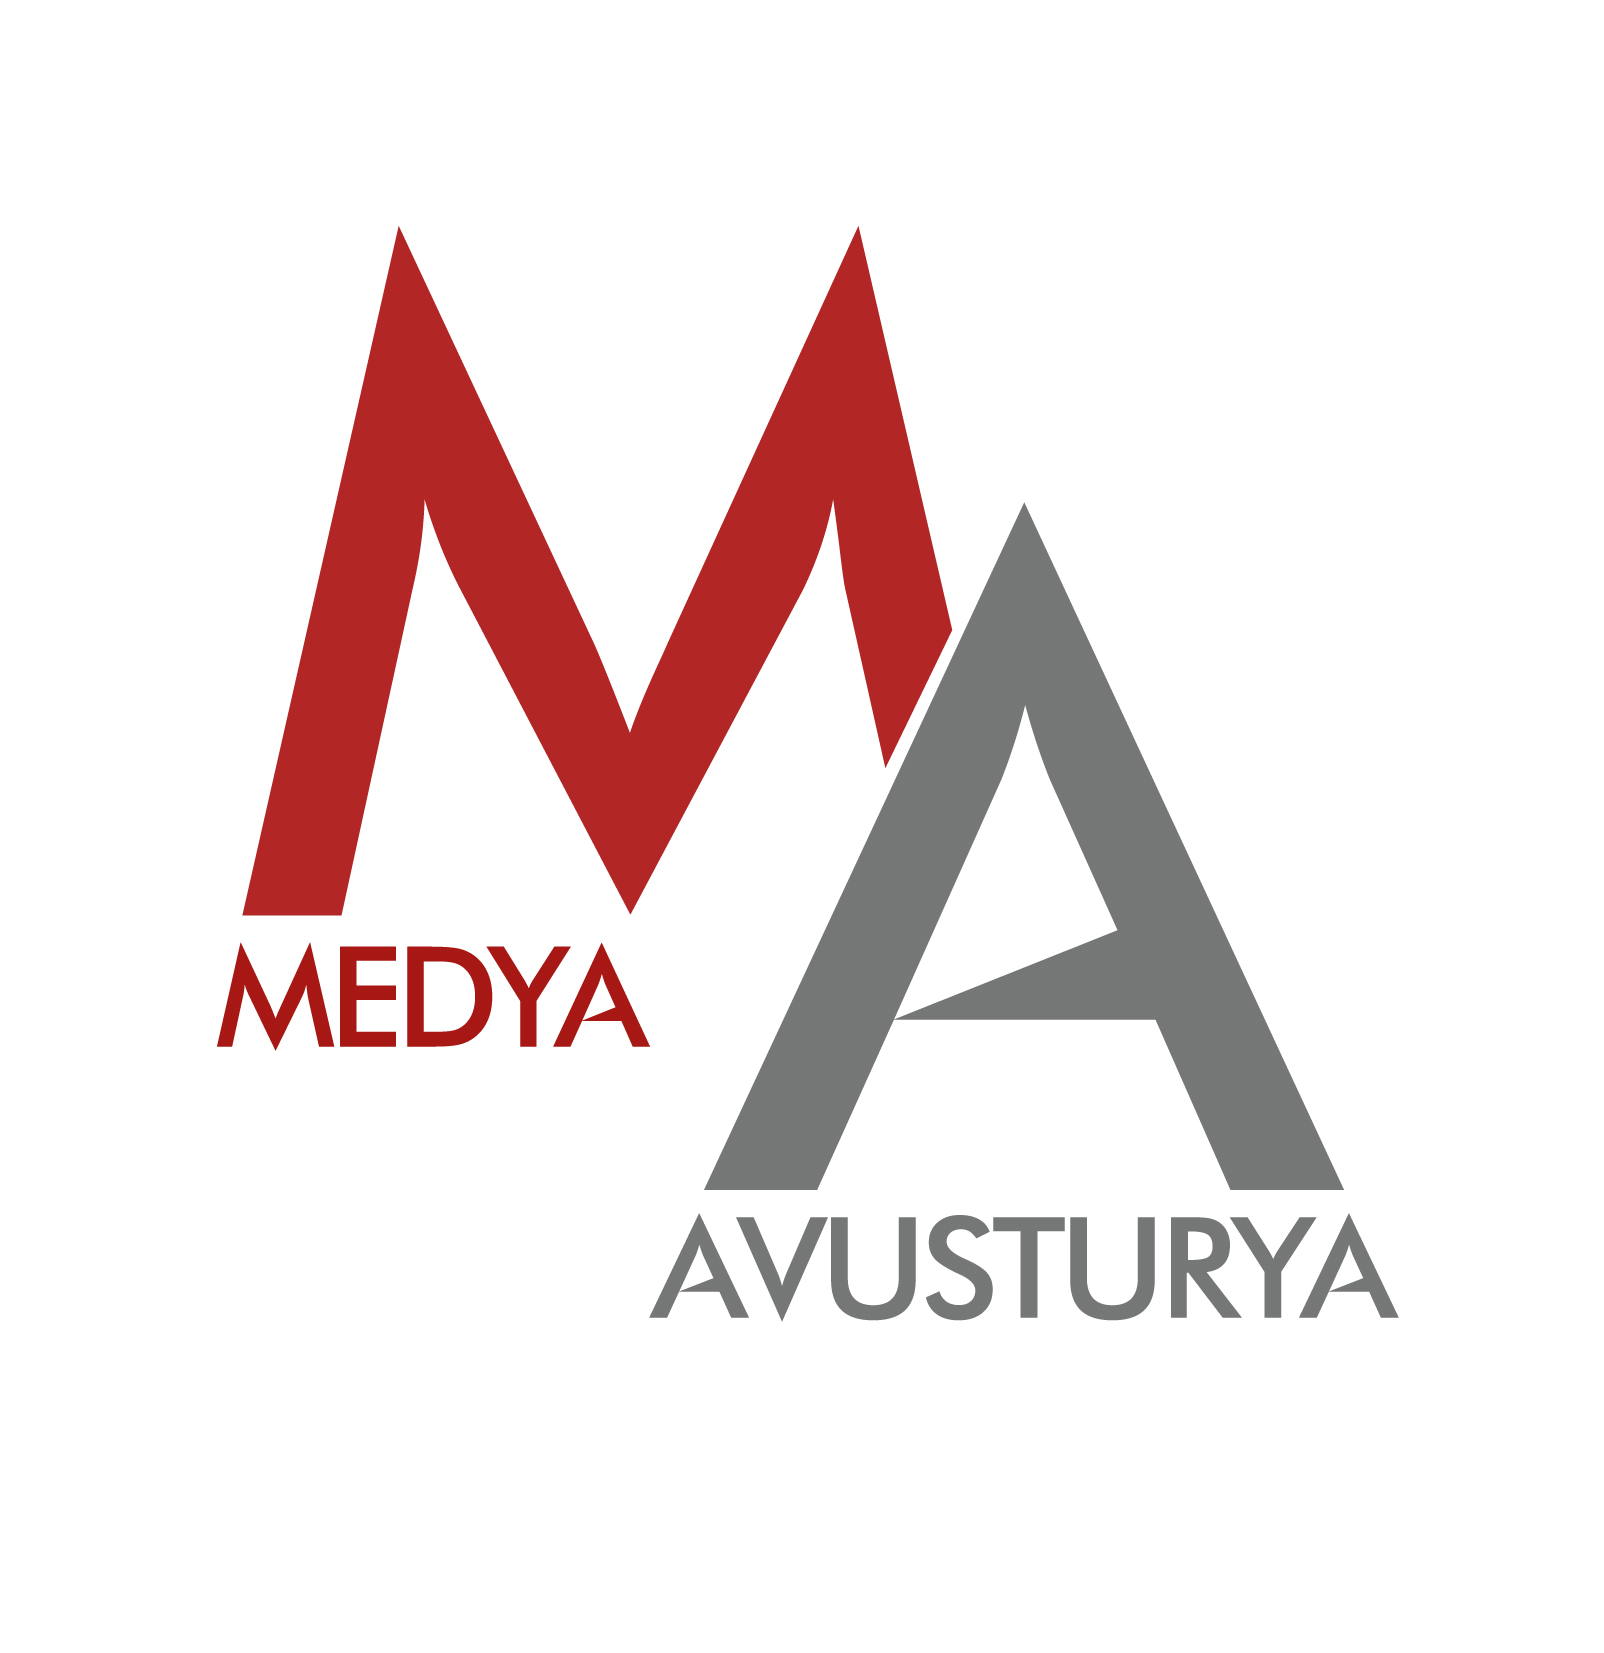 www.medyaavusturya.at